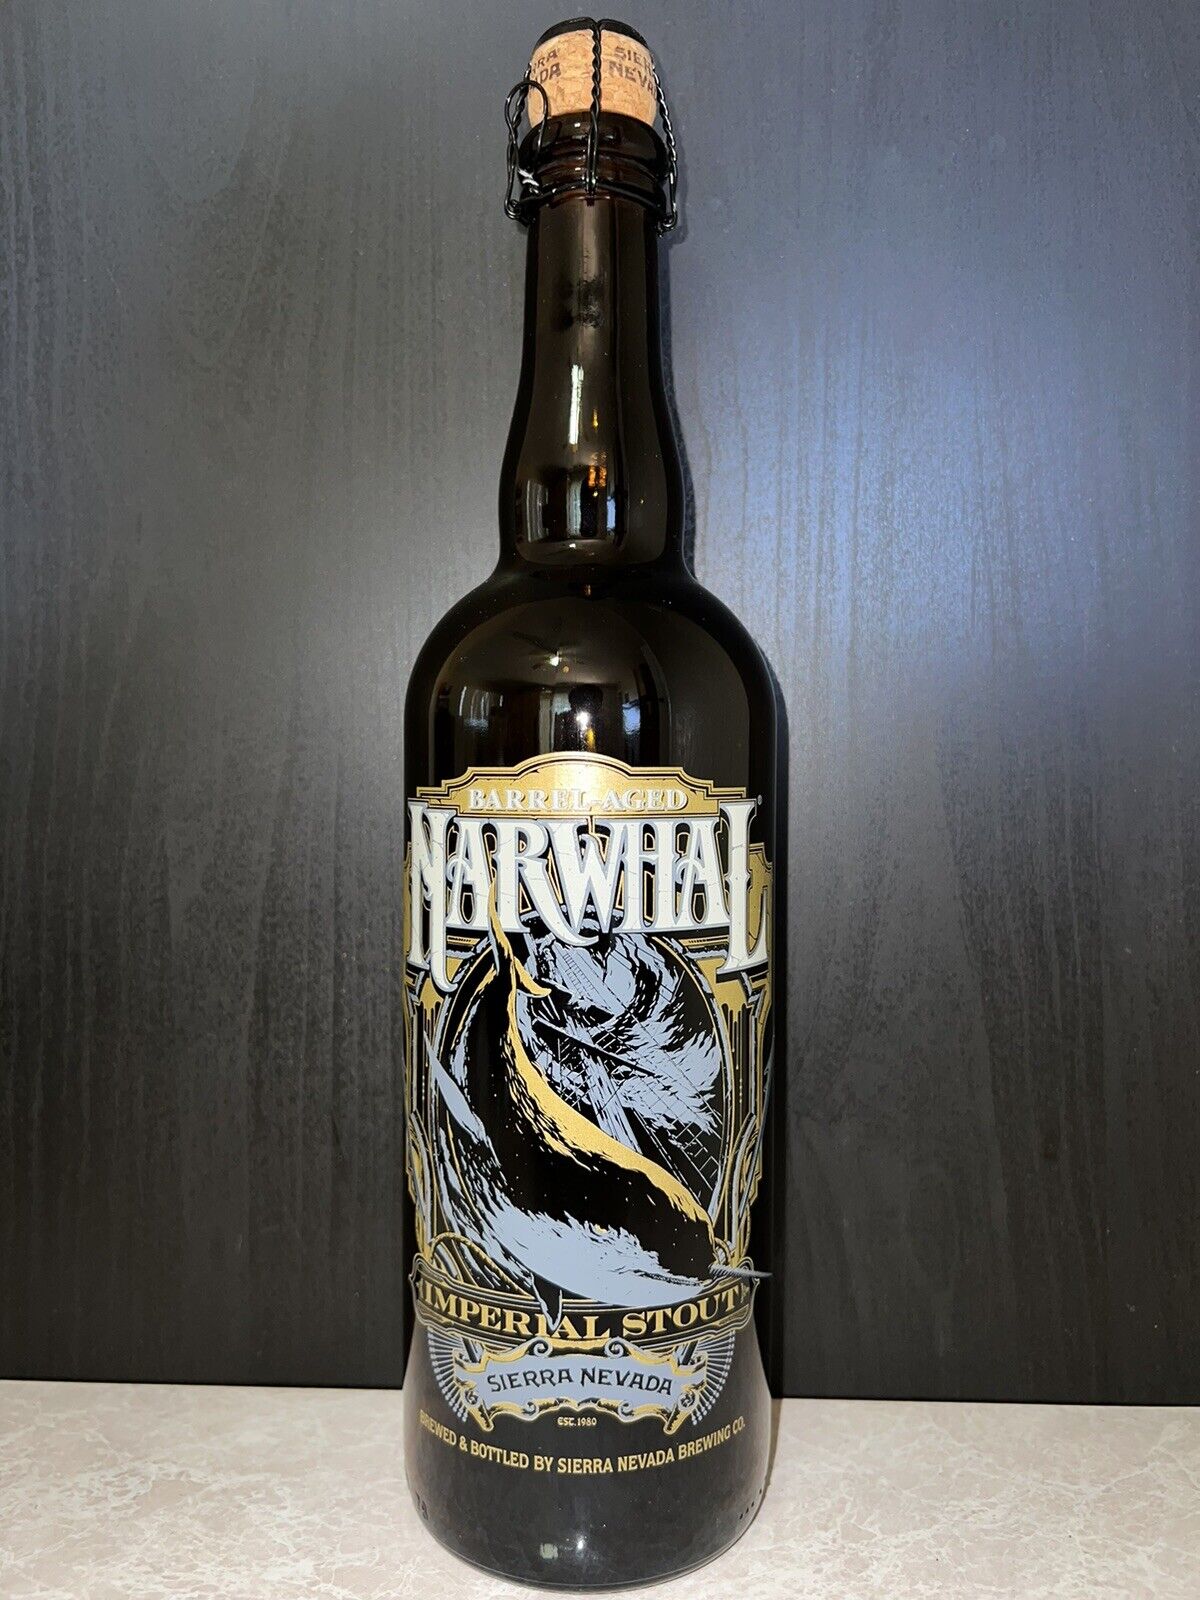 Sierra Nevada Narwhal Imperial Stout EMPTY Beer Glass BTL w/Cap 1pt. 9.4oz.